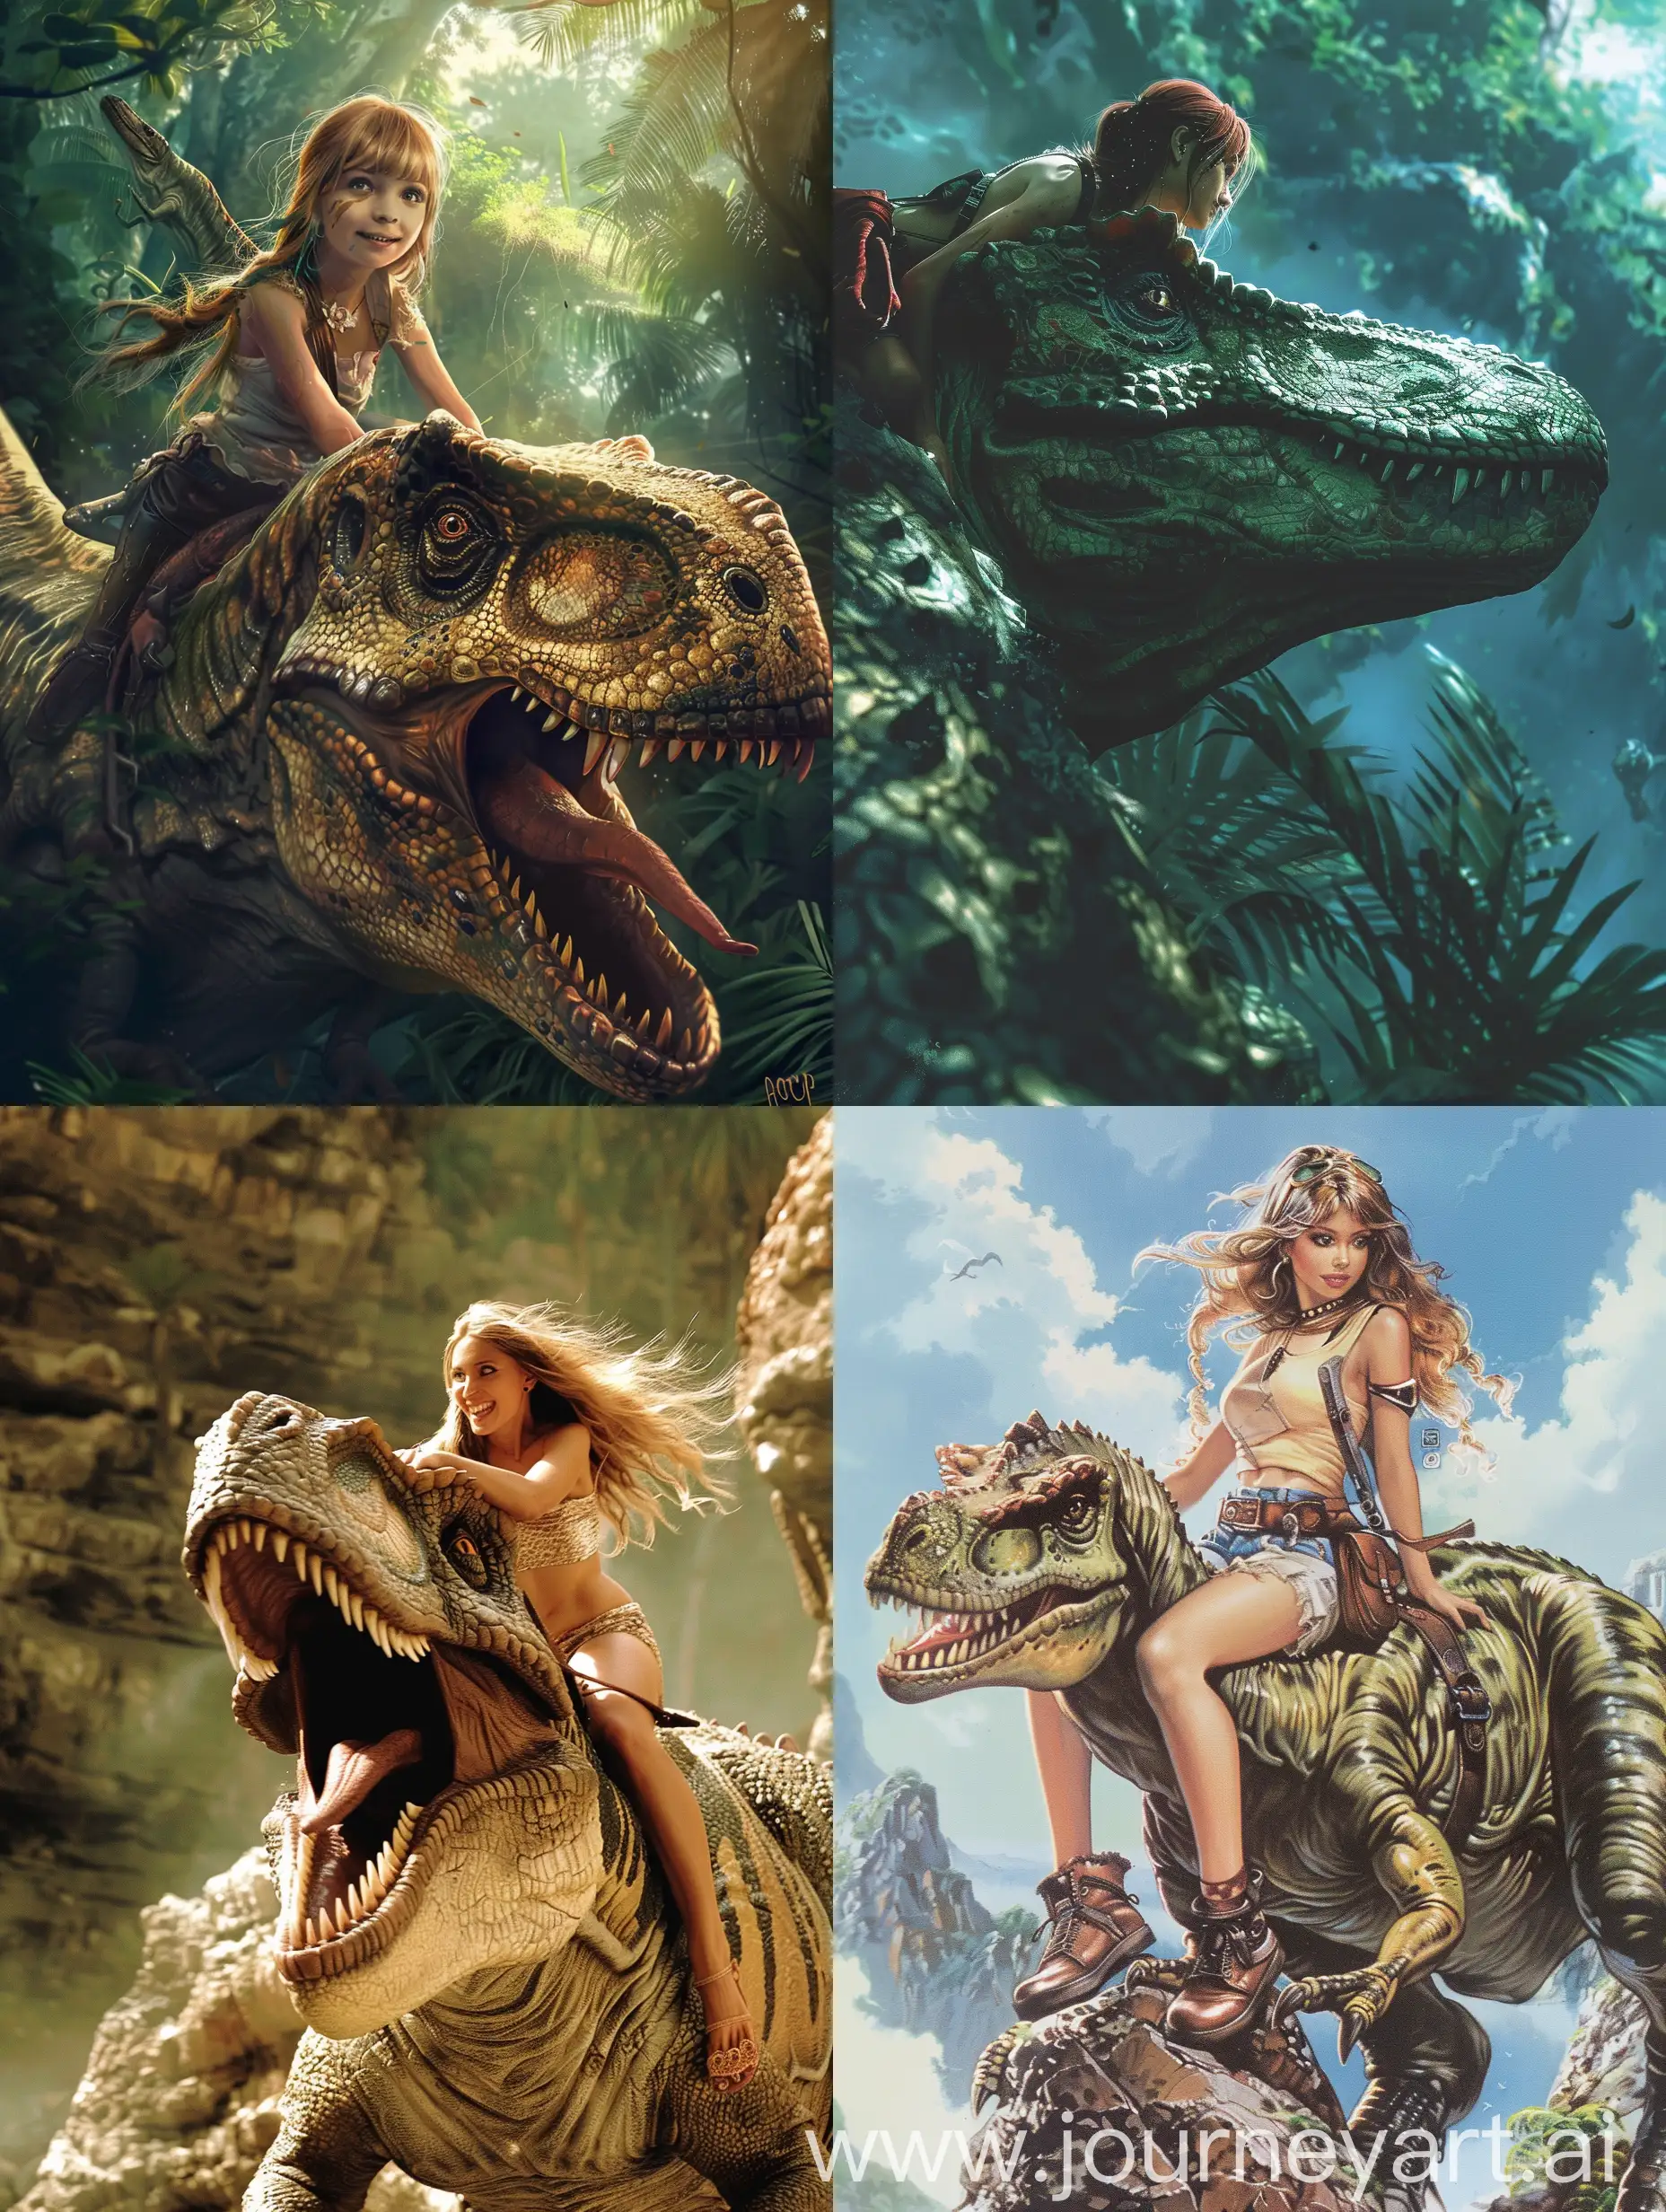 Adorable-Girl-Riding-a-Dinosaur-Adventure-Illustration